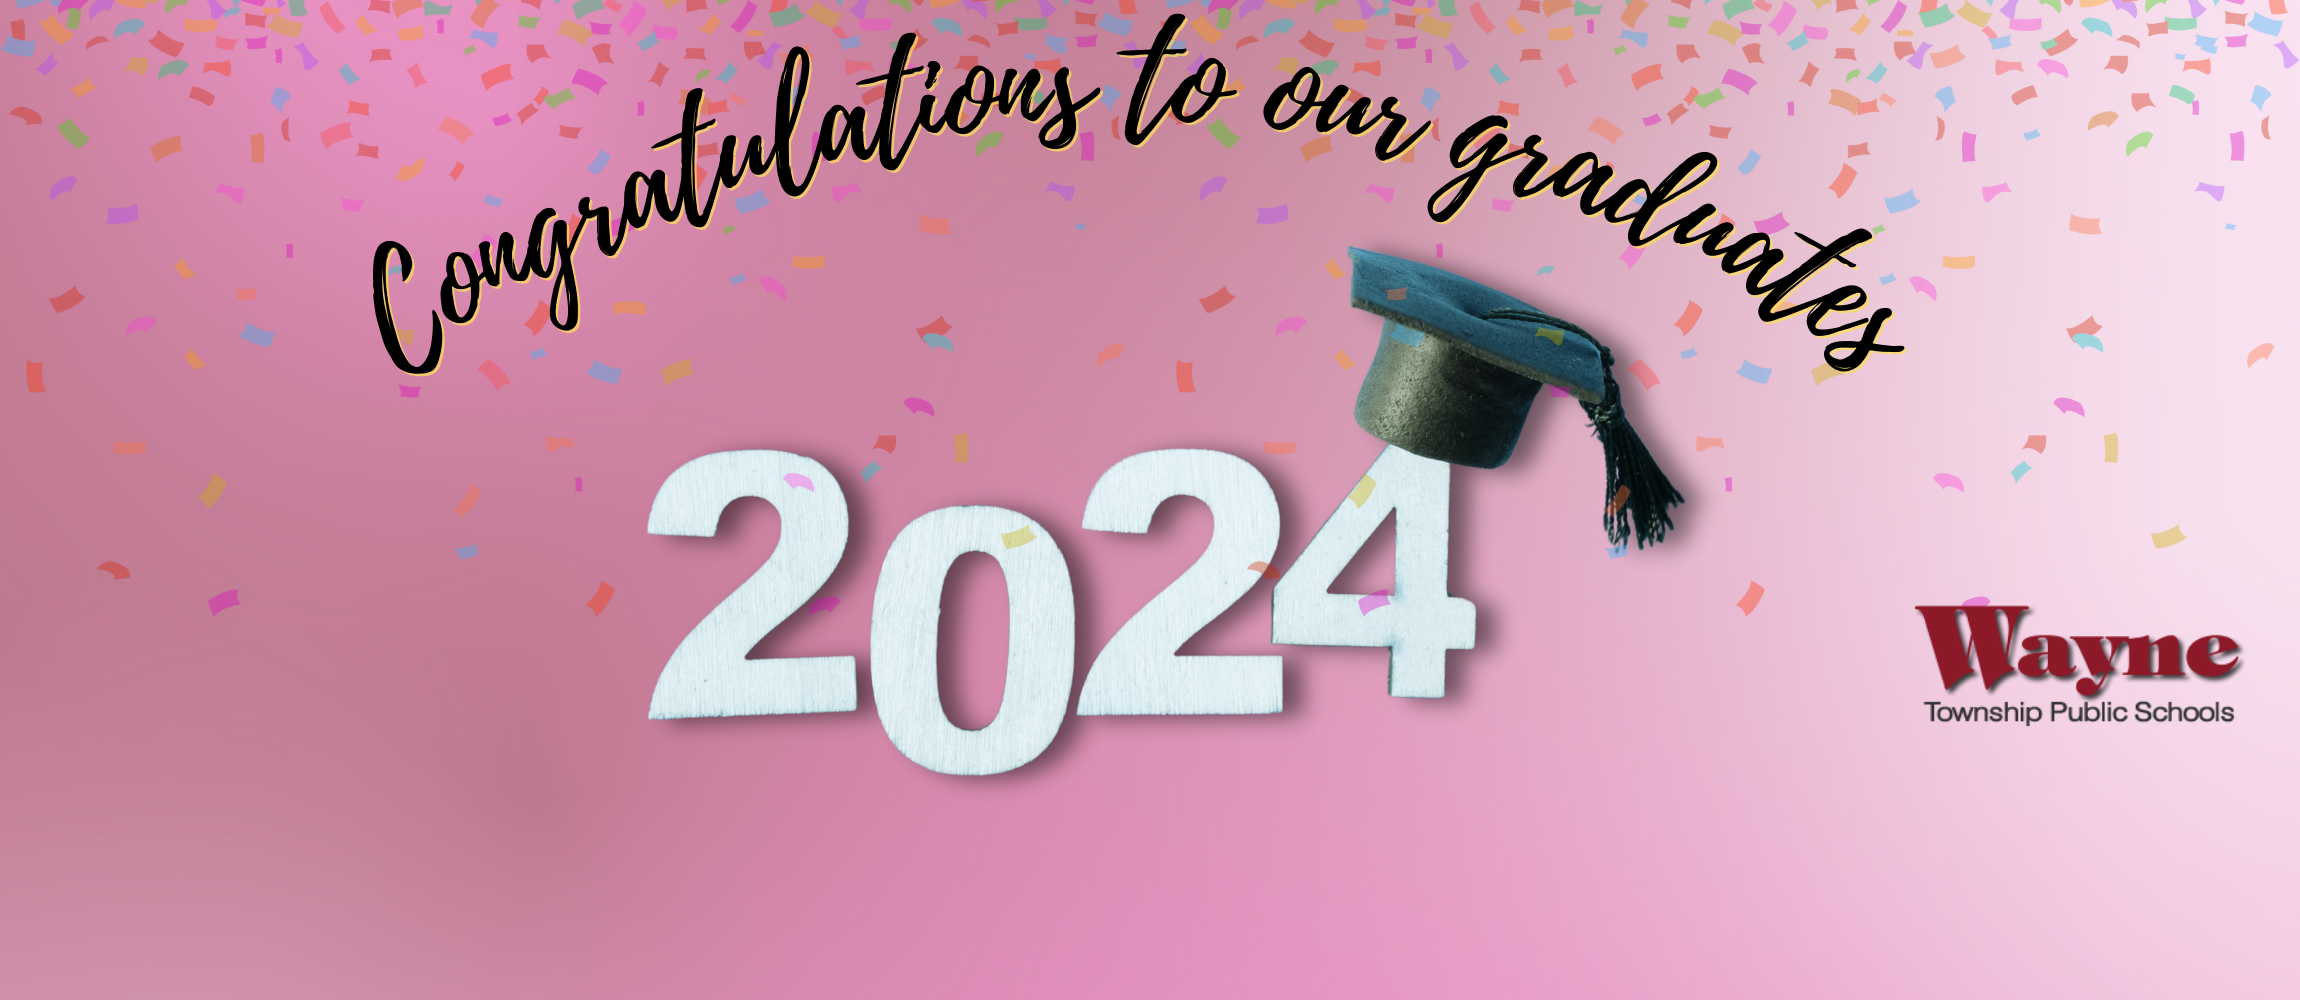 Congratuations to our 2024 graduates!